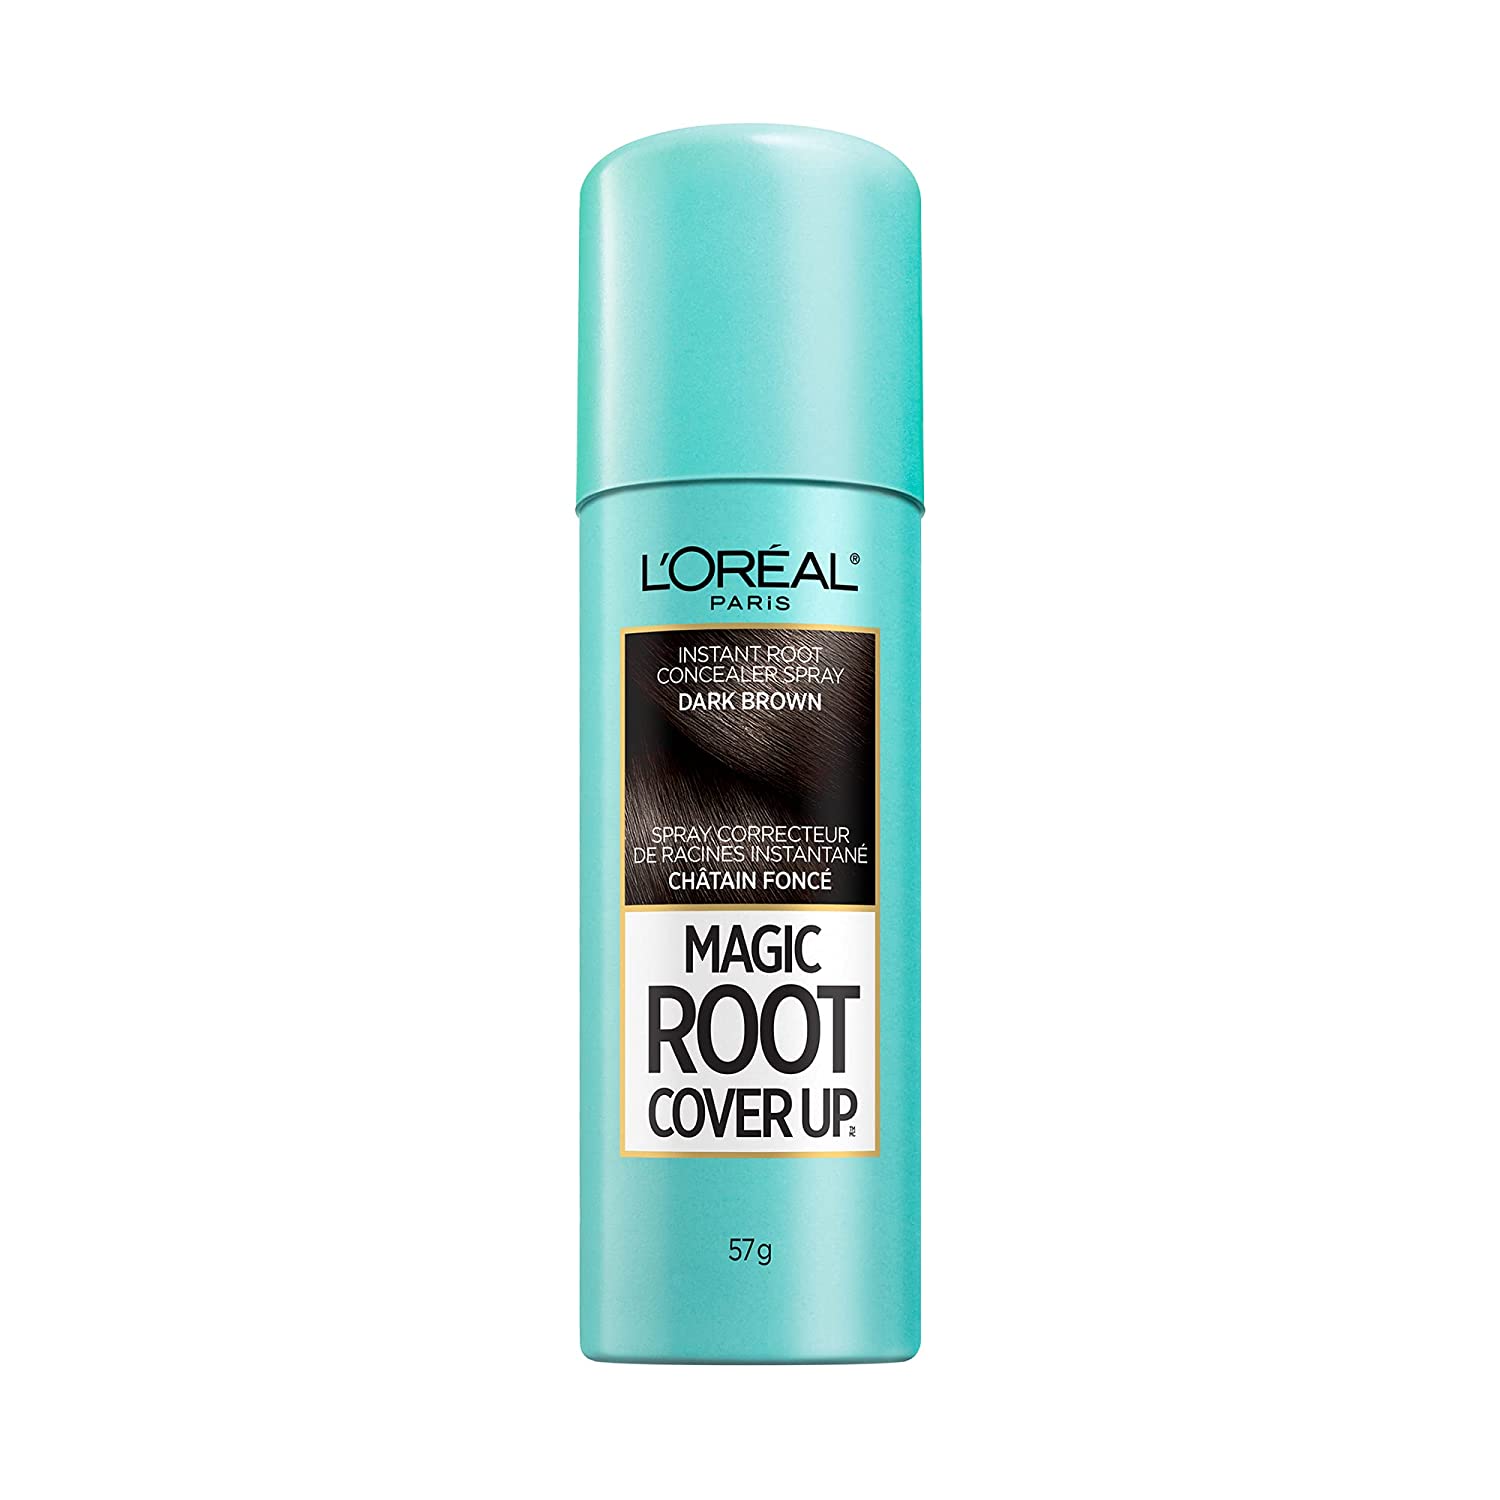 L'Oreal Paris Magic Root Cover Up Gray Concealer Spray 